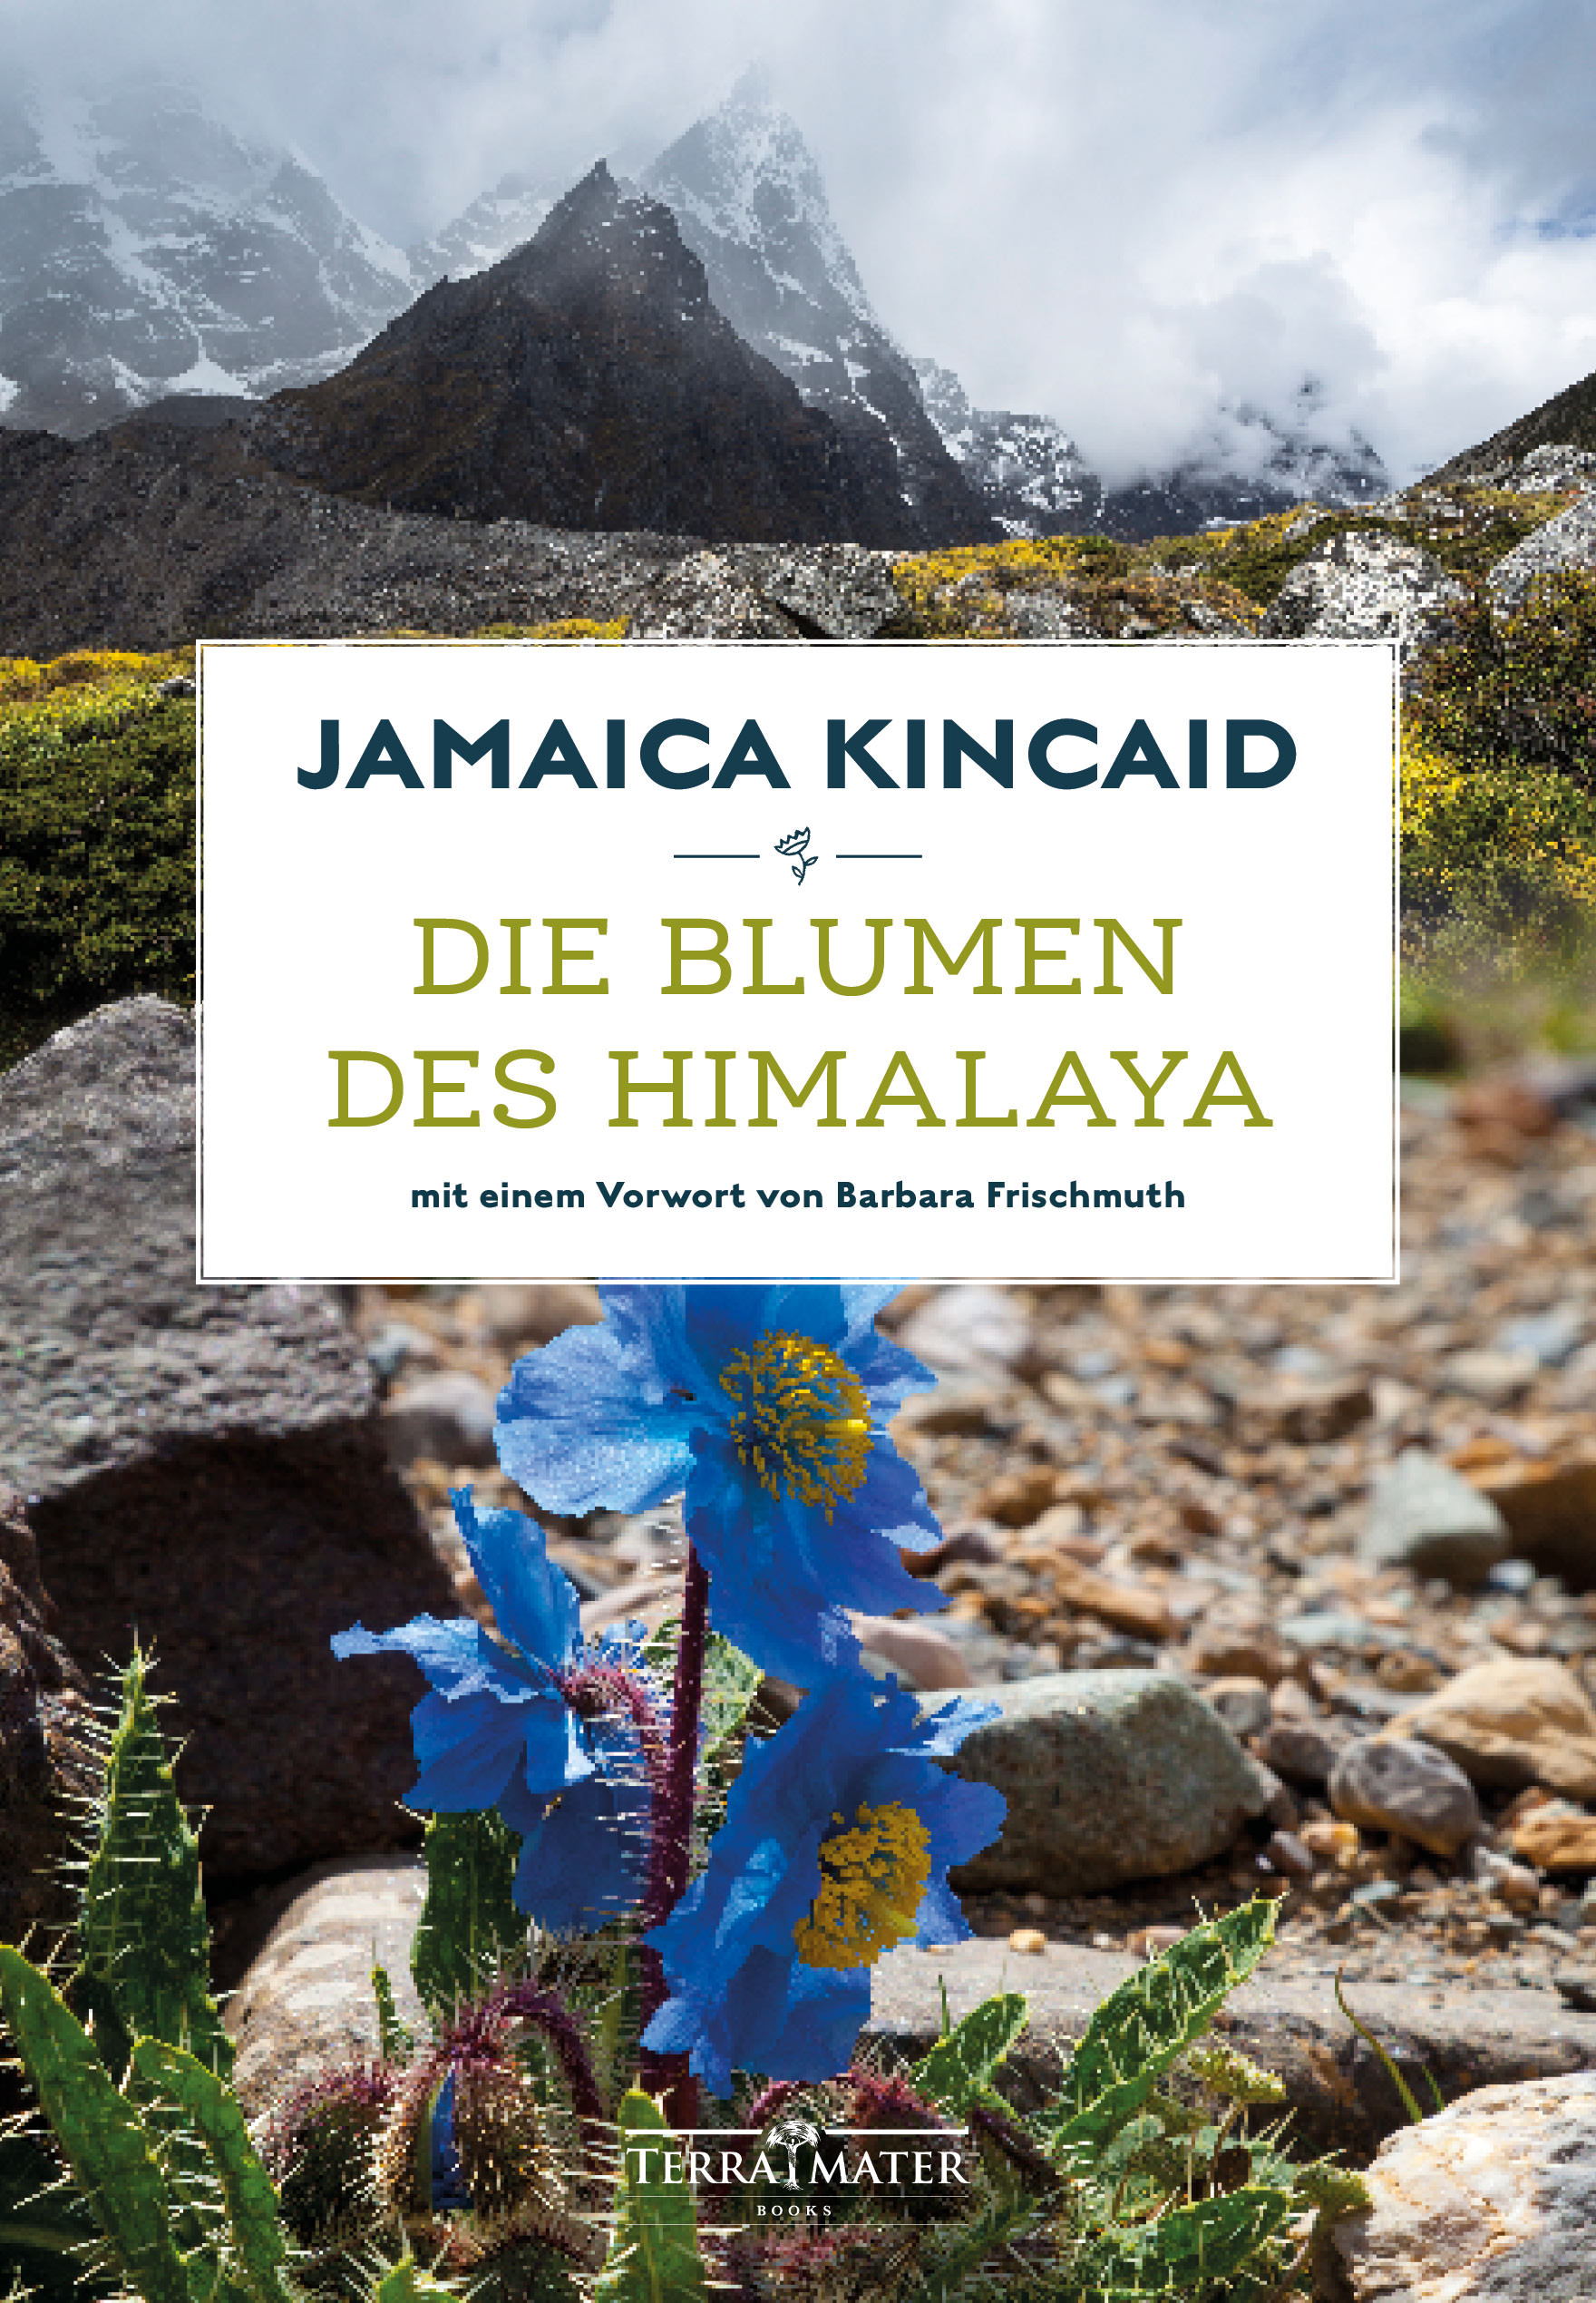 Jamaica Kincaid: Die Blumen des Himalaya